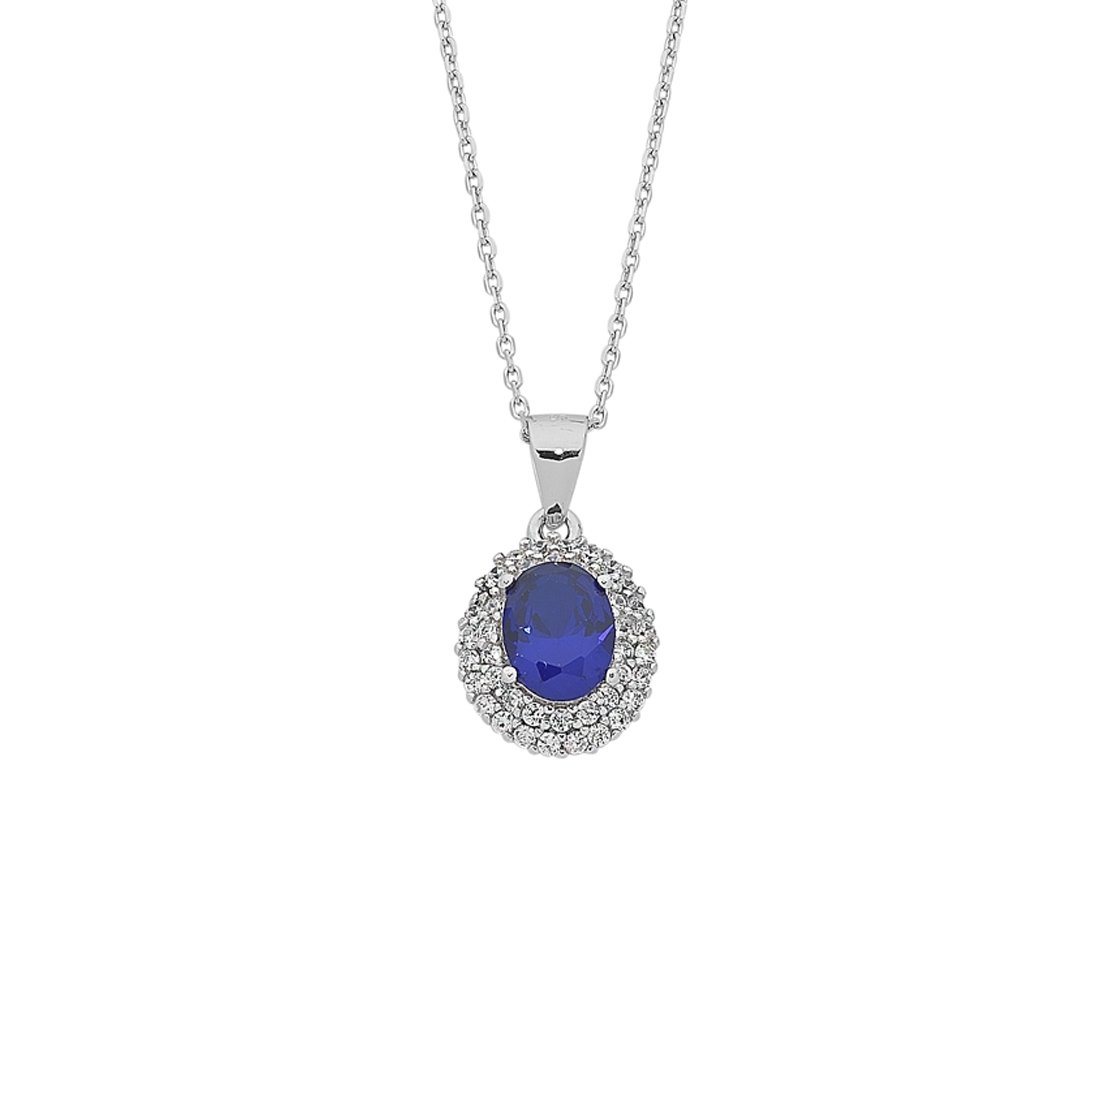 Sterling Silver Blue Cubic Zirconia Necklace Necklaces Bevilles 